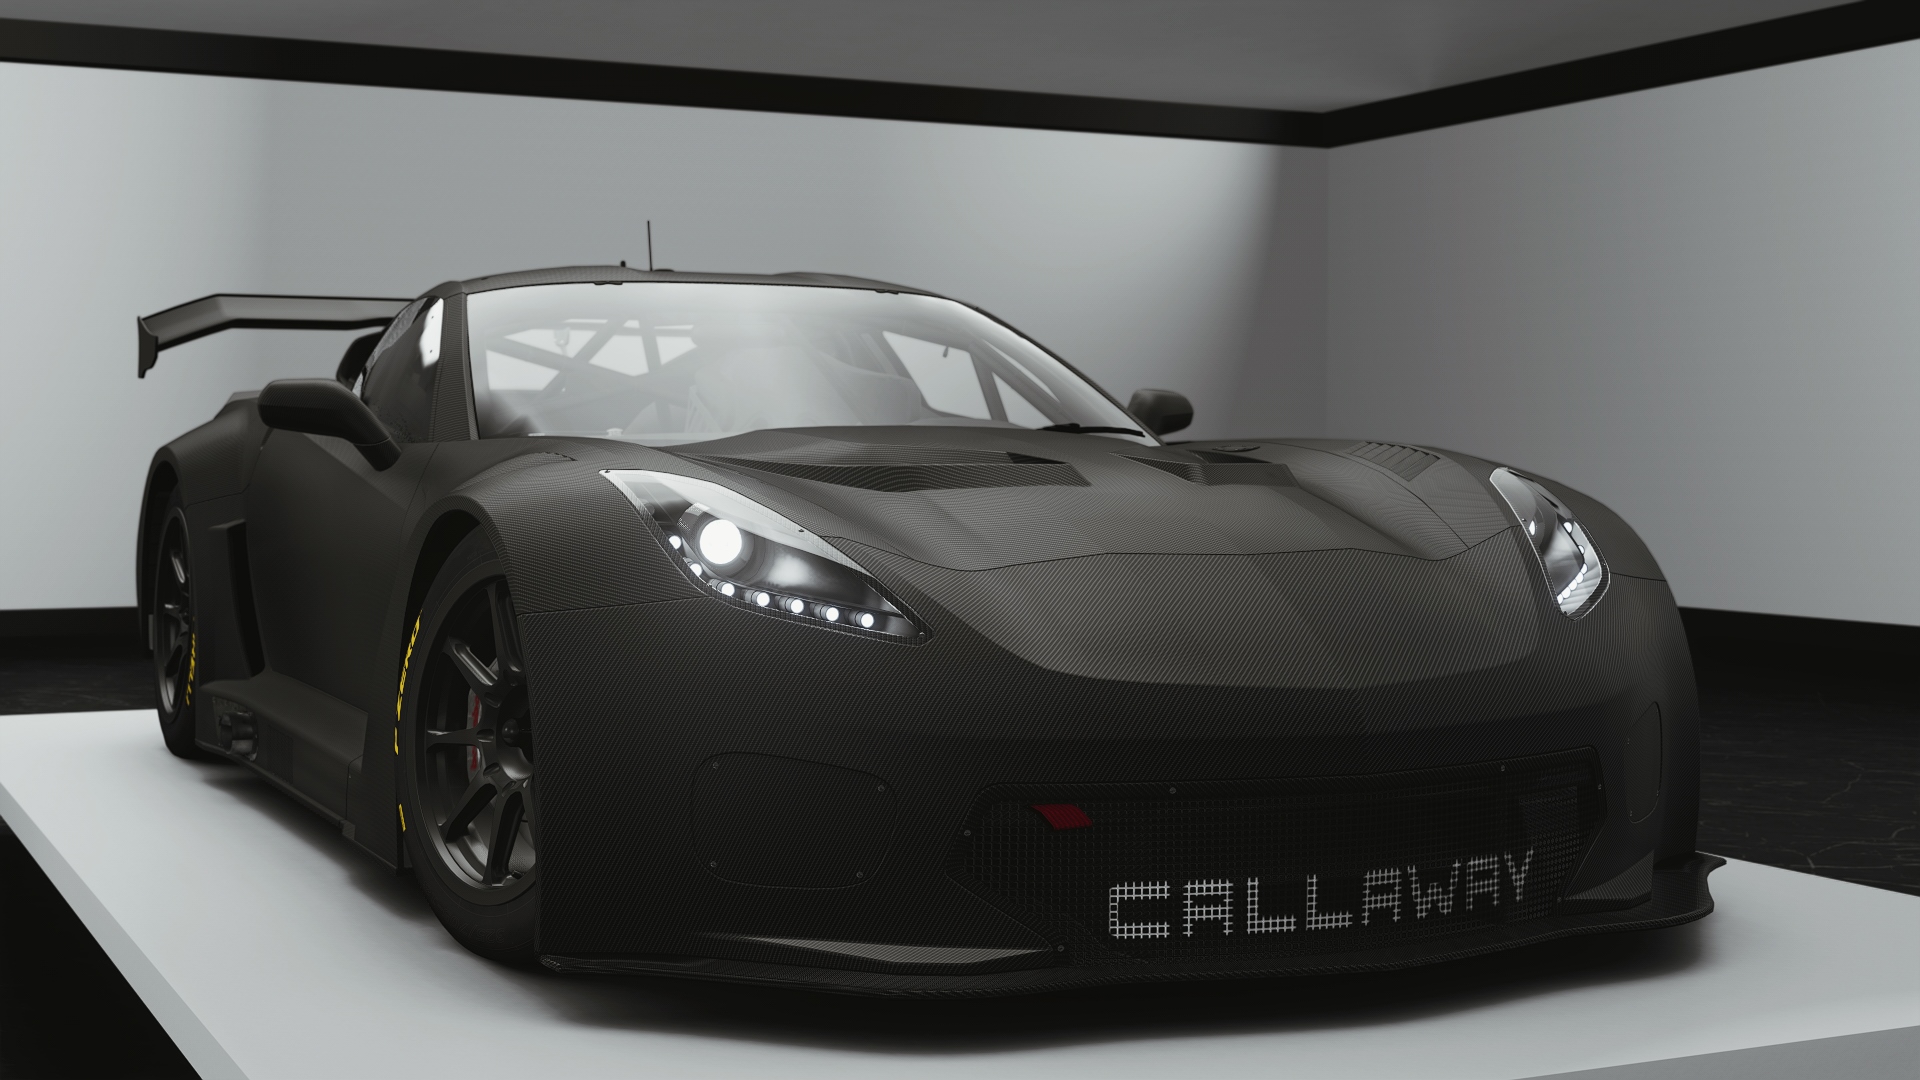 Chevrolet Corvette C7 GT3-R Callaway, skin #0 Concept Car